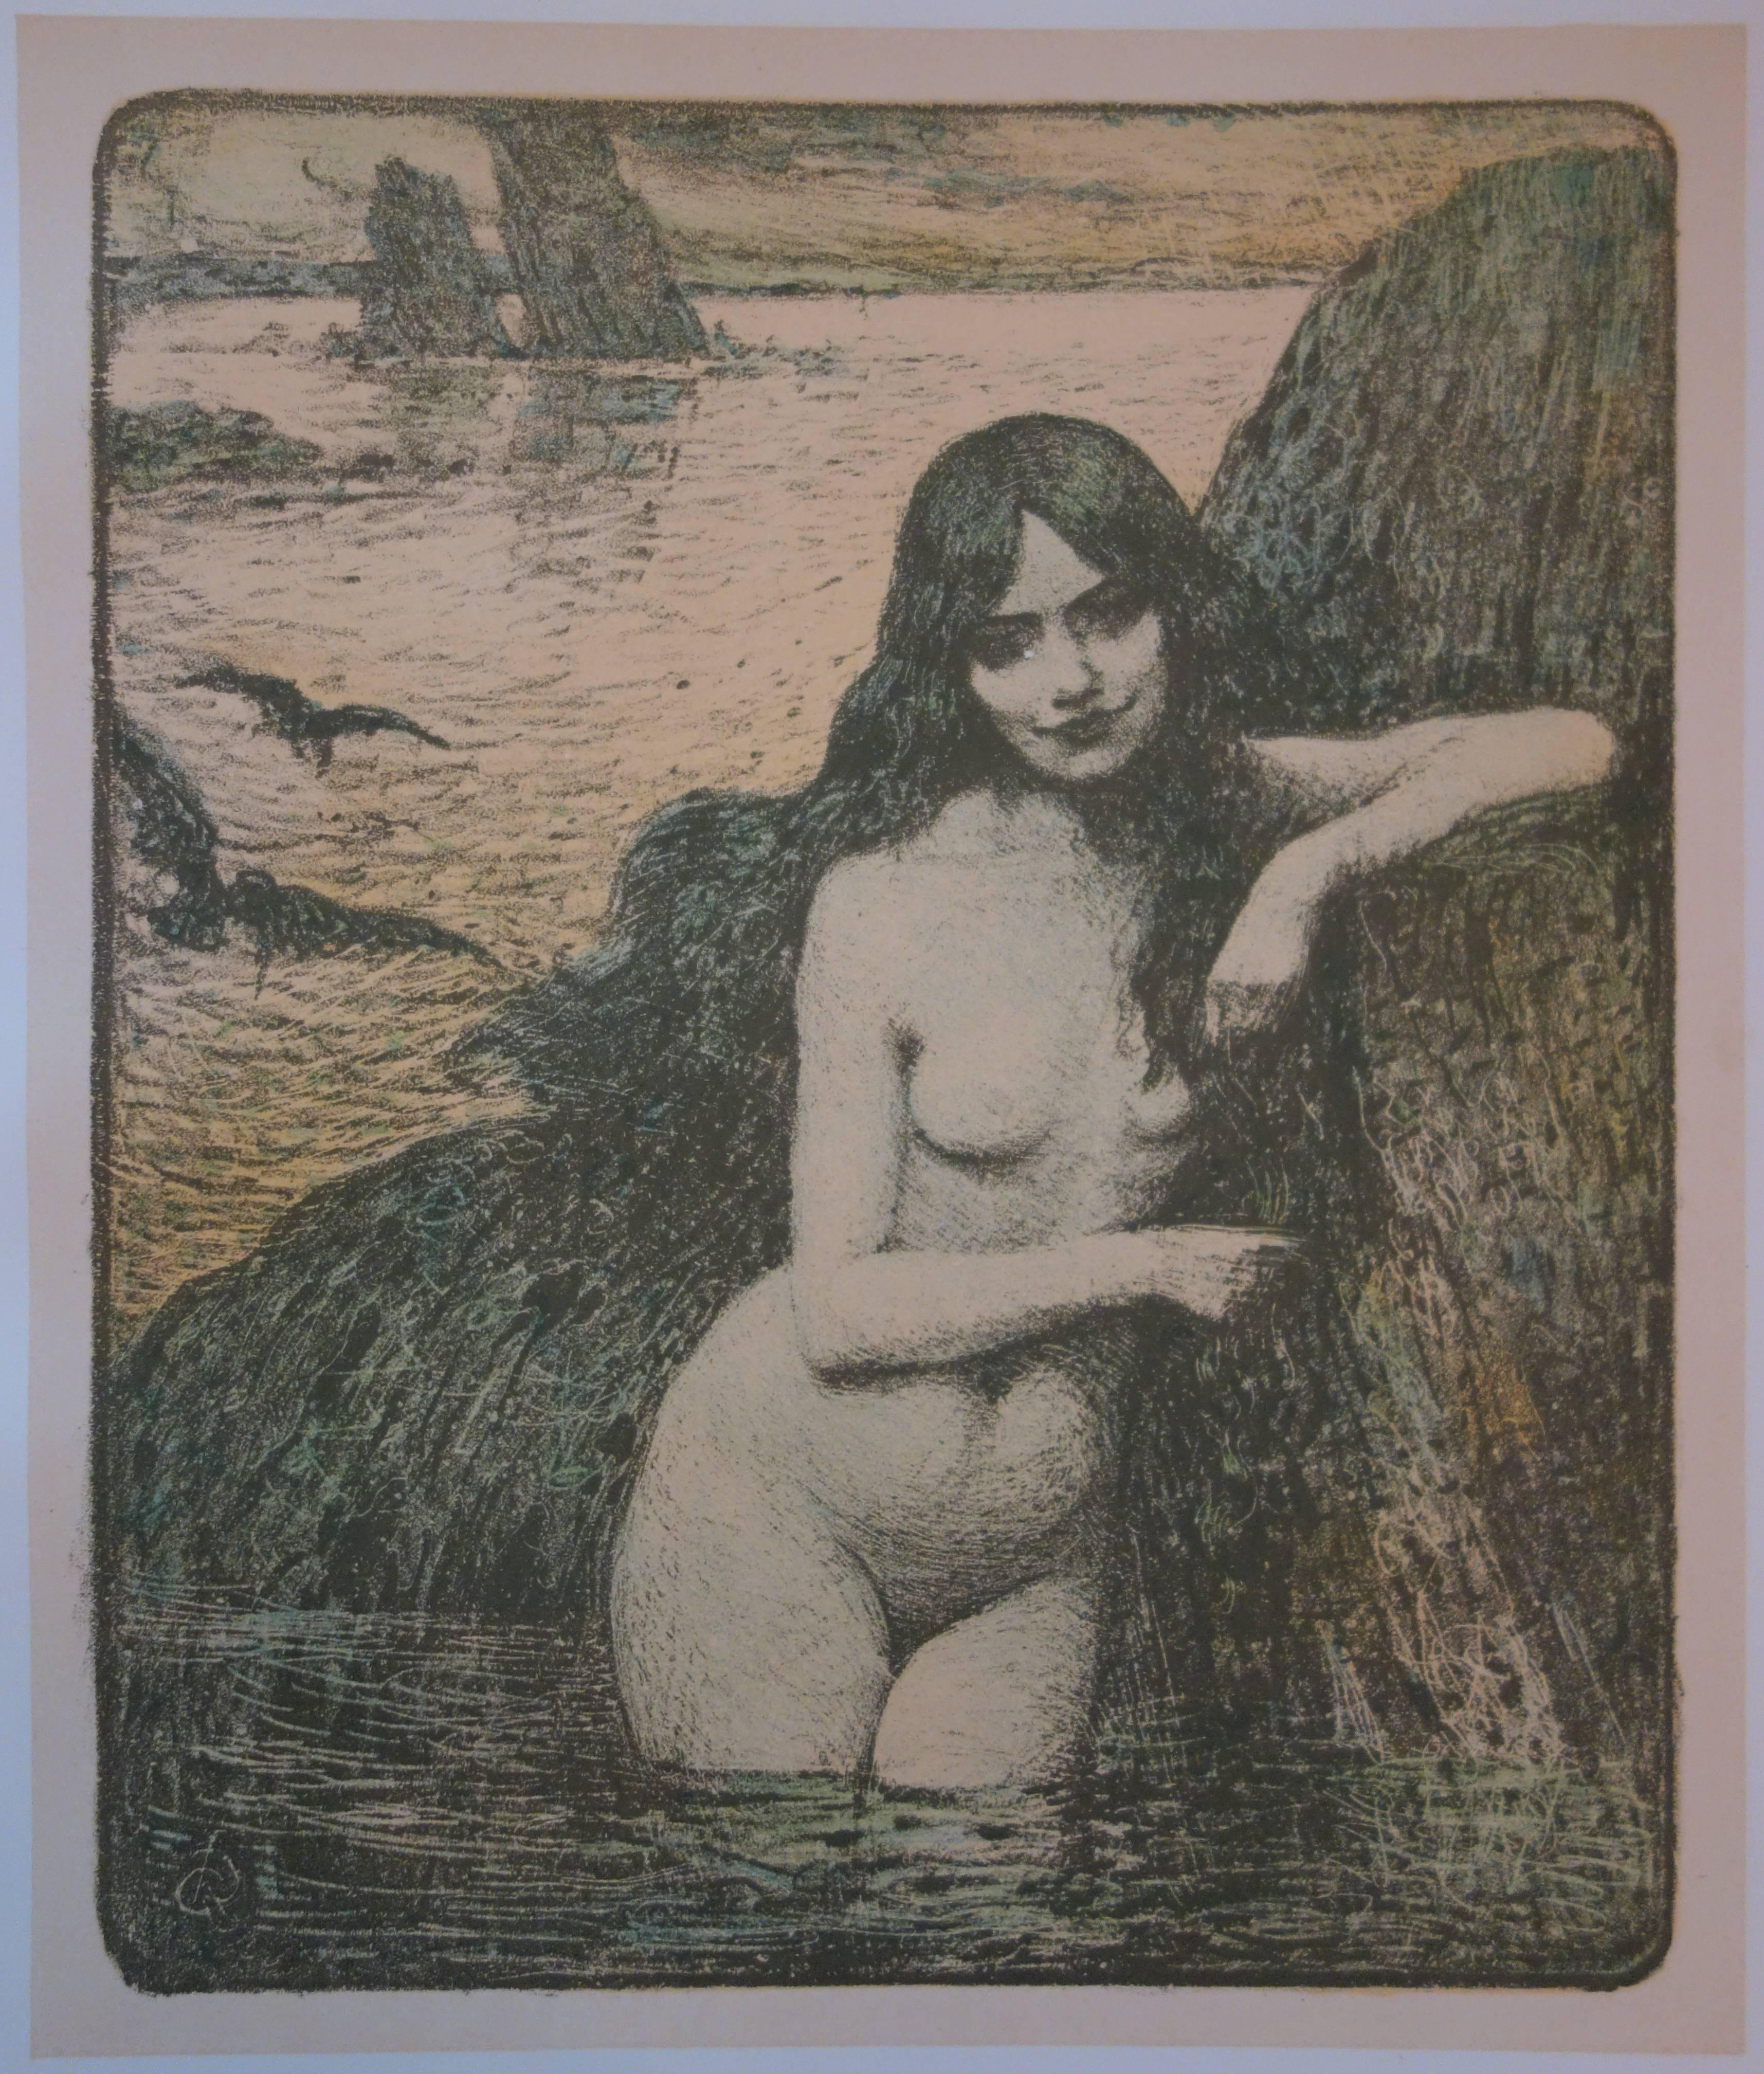 Mermaid - Original lithograph - 1897 - Art Nouveau Print by Charles François Prosper Guérin